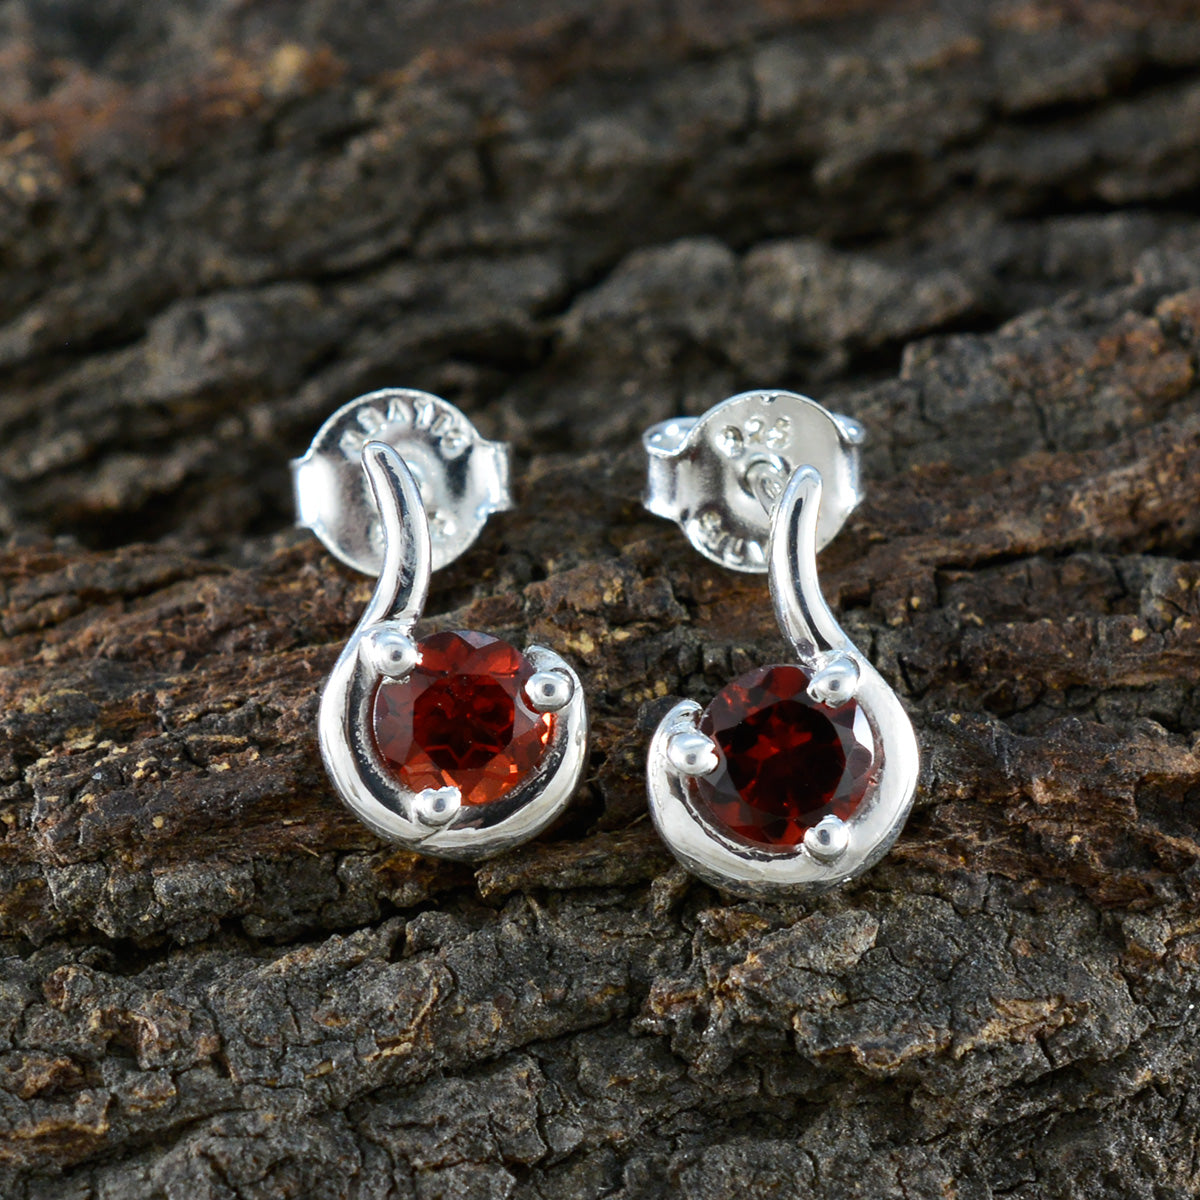 Riyo Entzückender Sterling Silber Ohrring für Demoiselle Granat Ohrring Lünette Fassung Roter Ohrring Ohrstecker